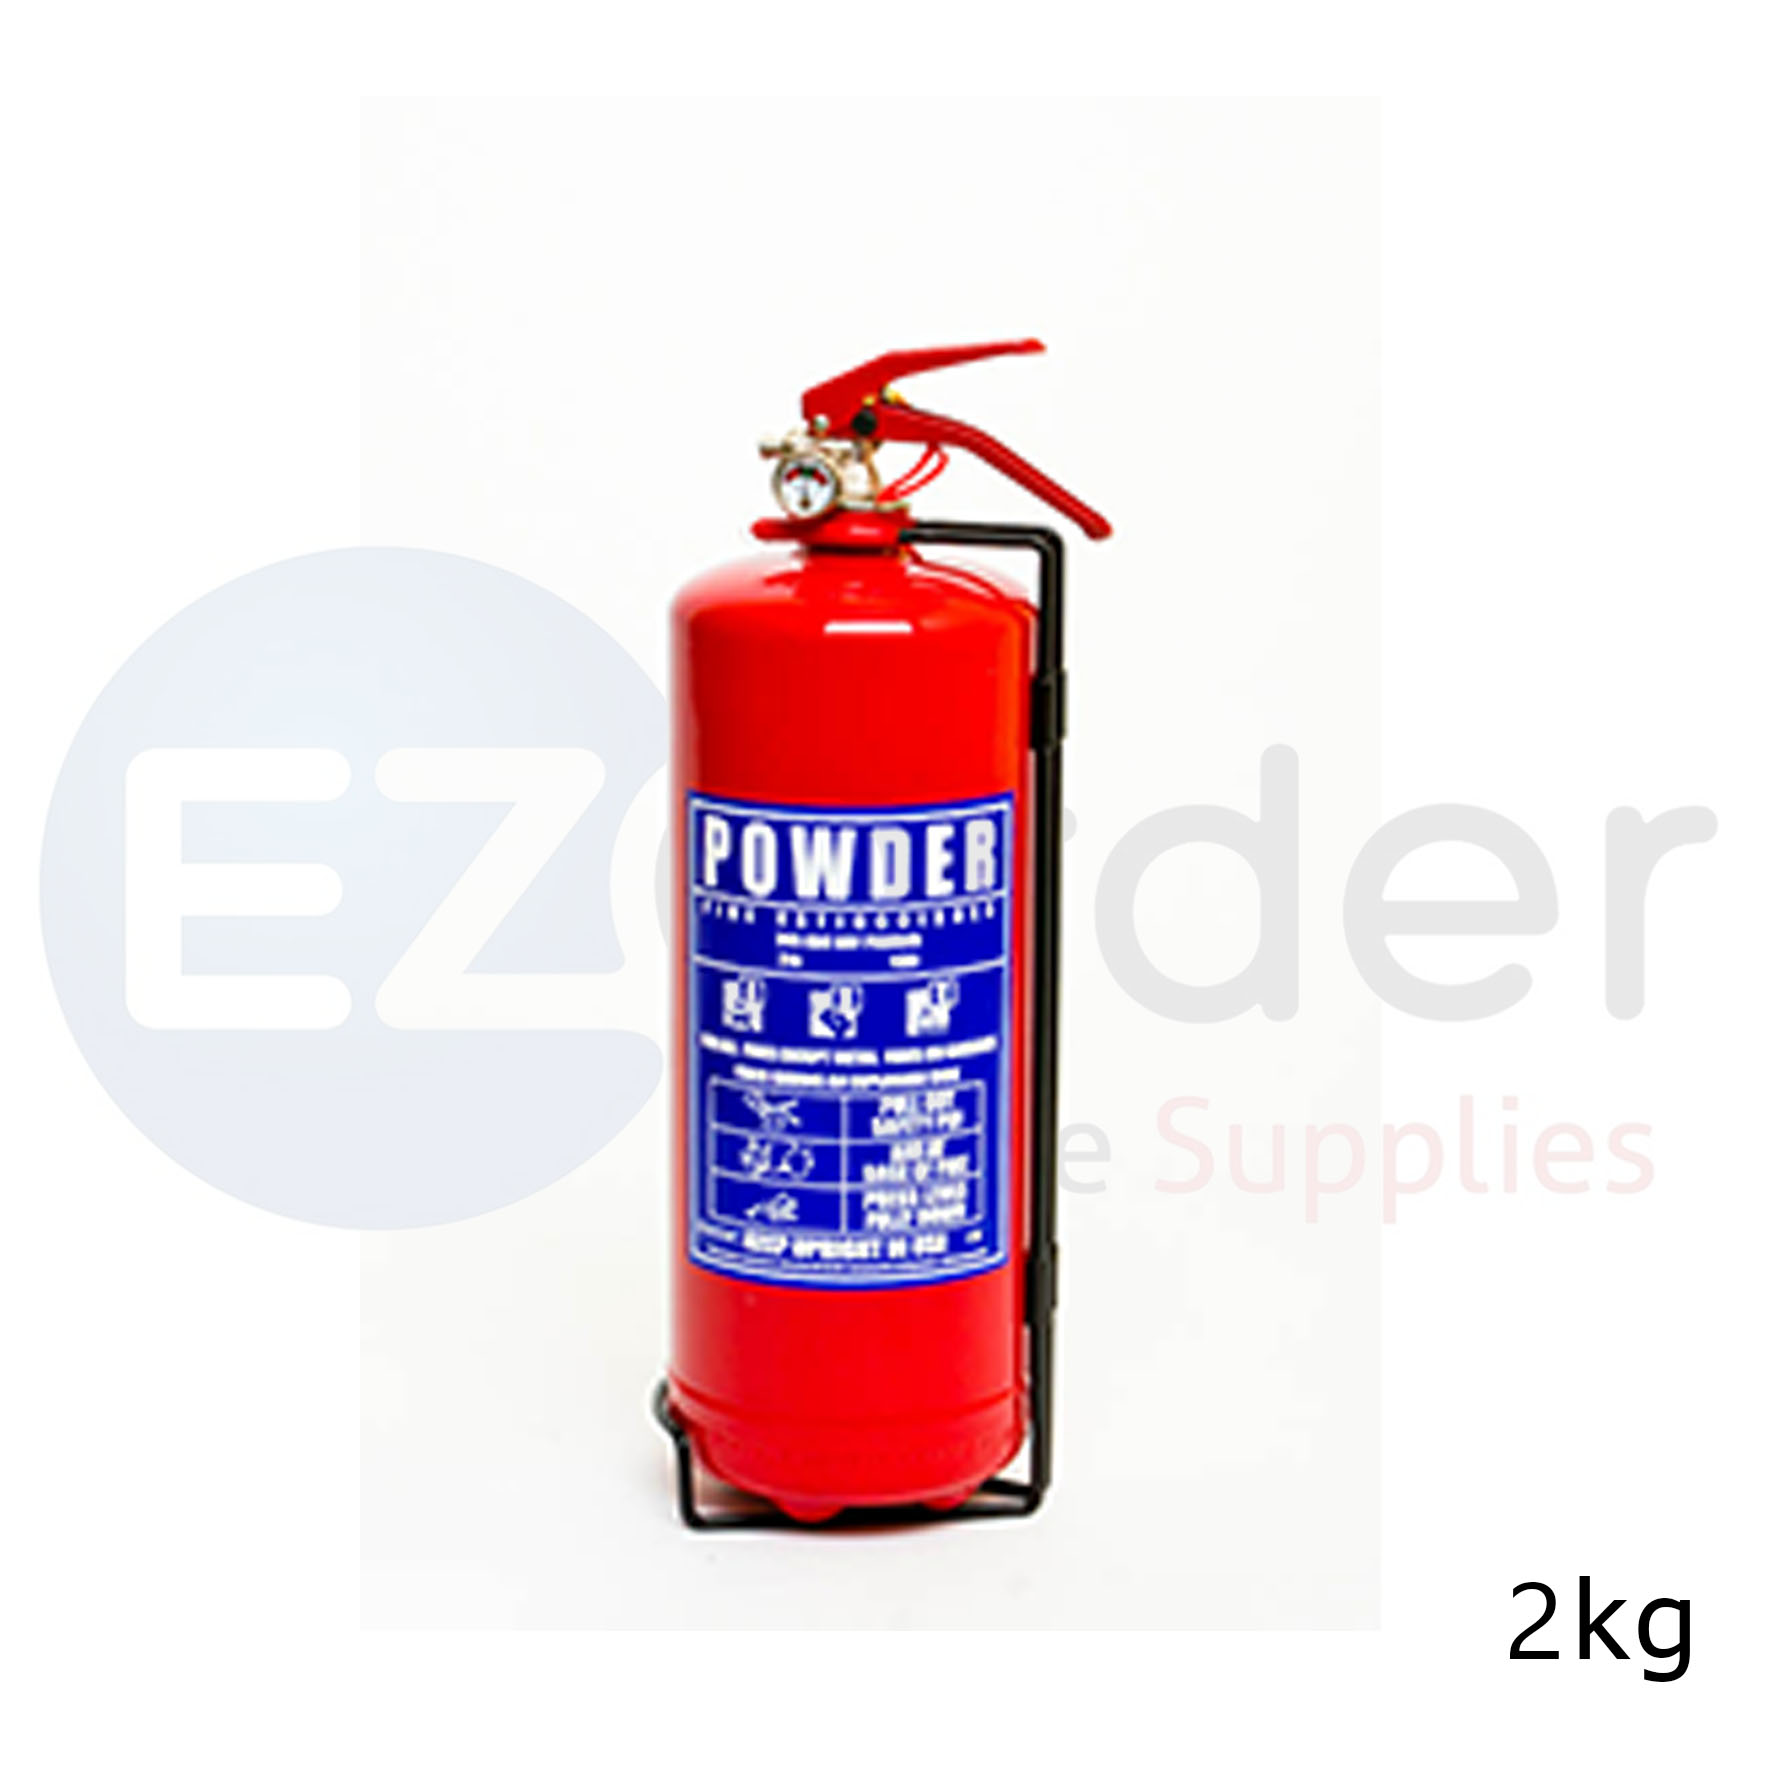 Fire extinguisher, dry powder, 2 kg.